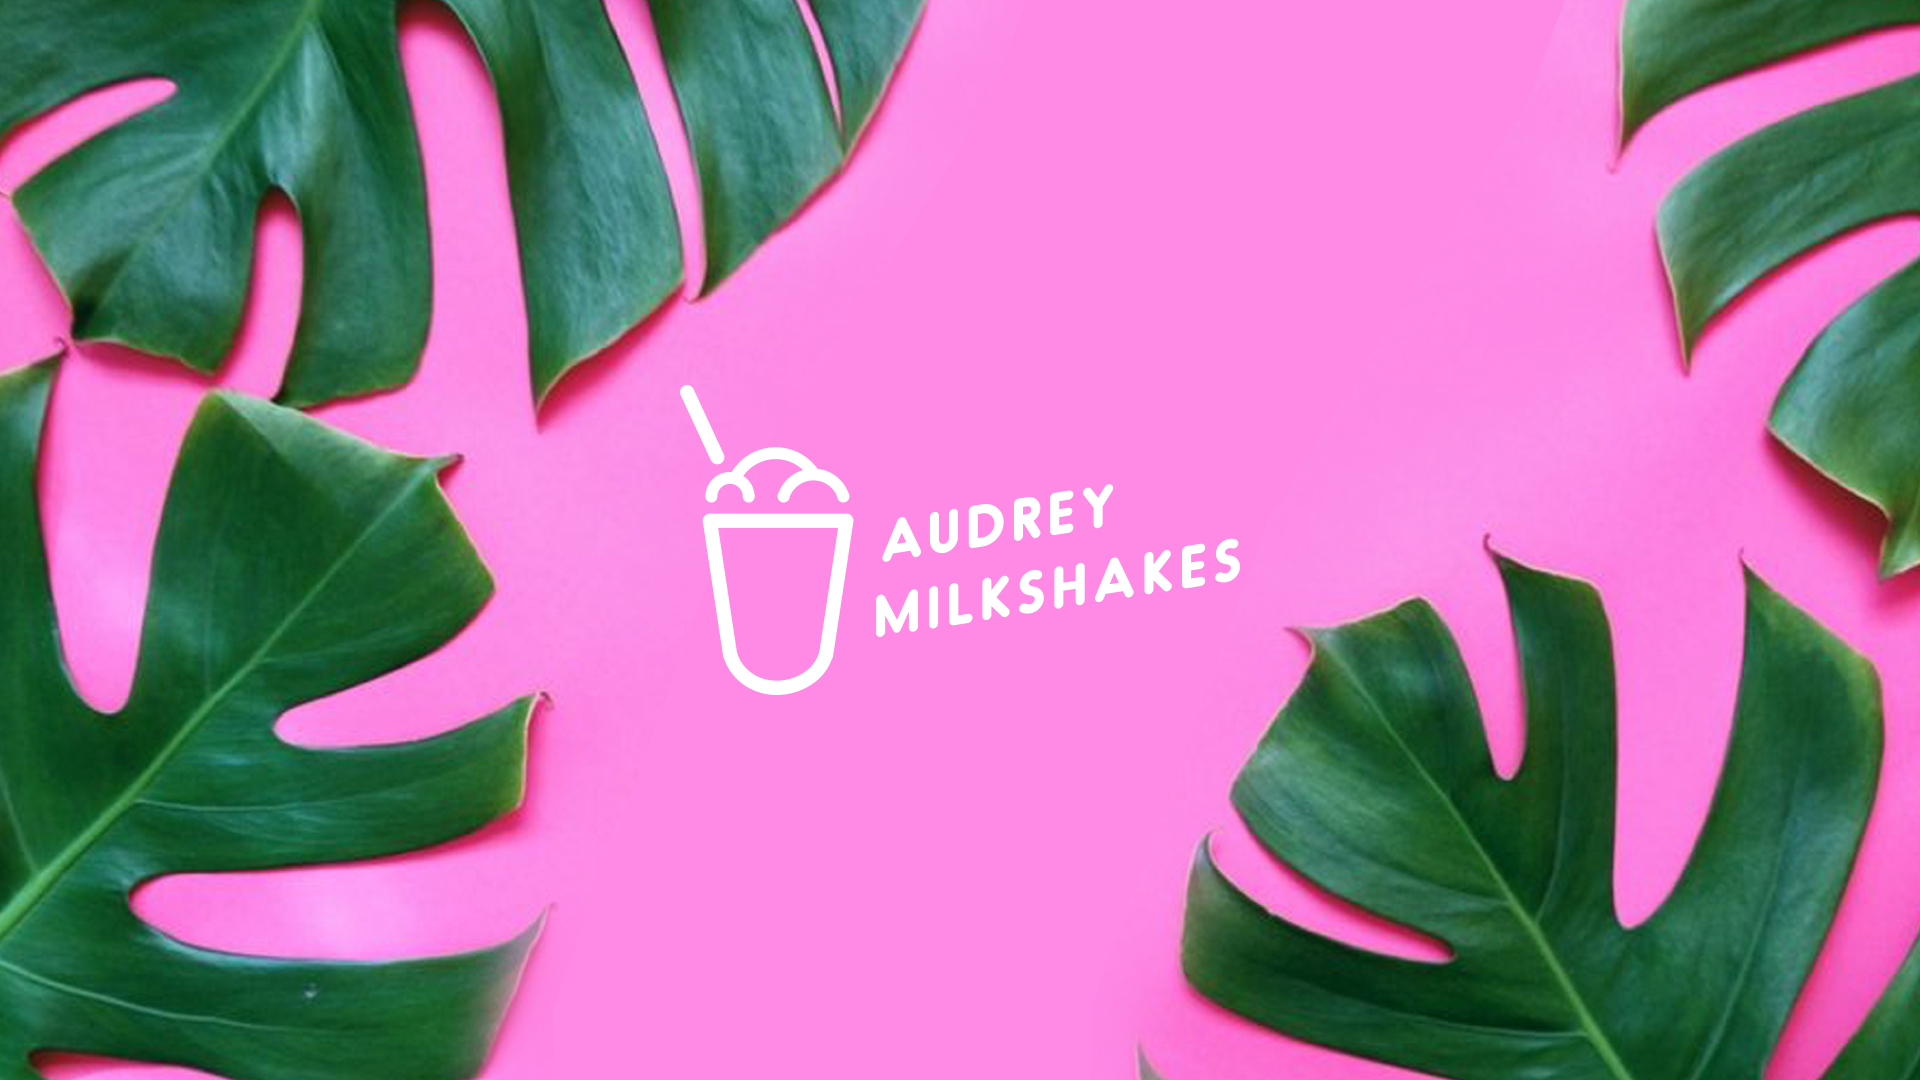 Audrey’s Milkshakes